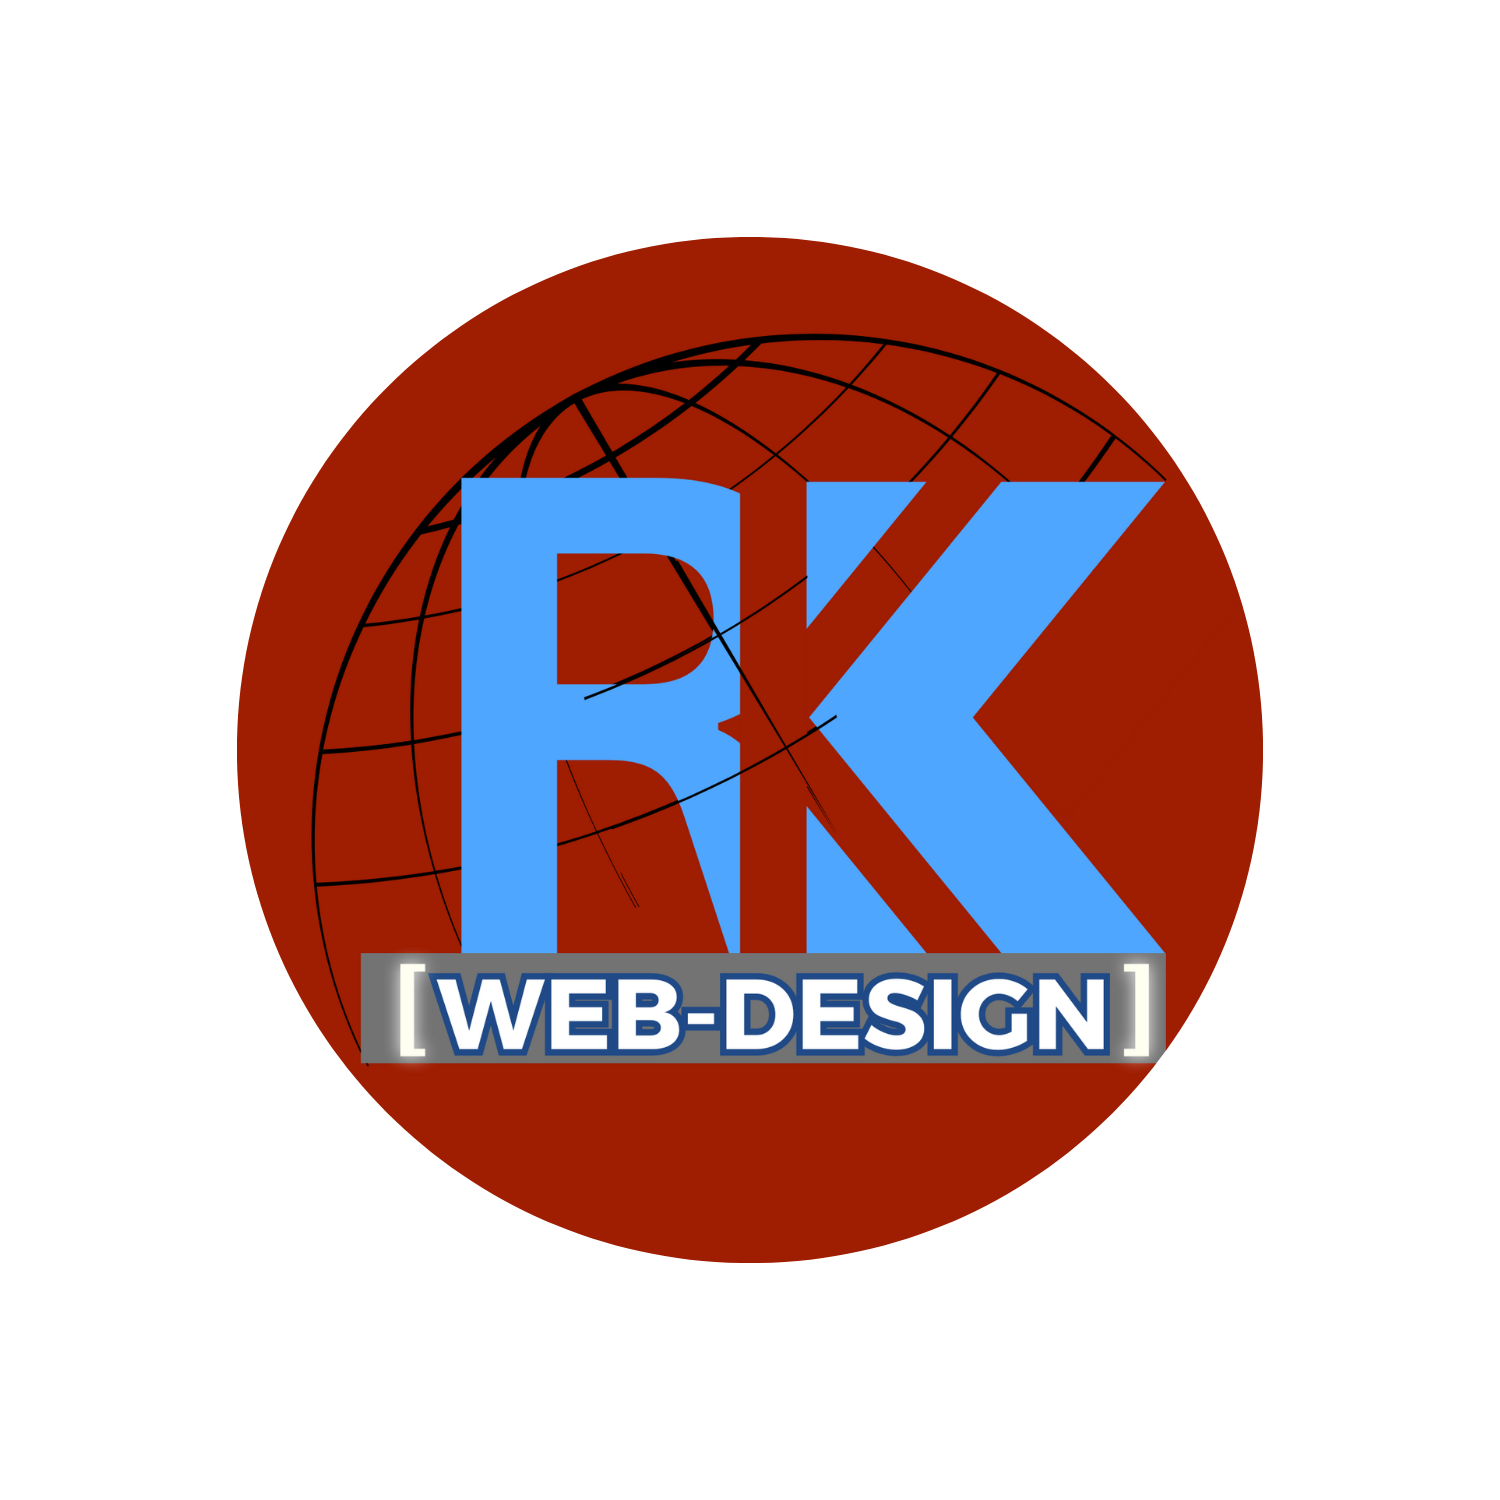 (c) Web-design-rk.de